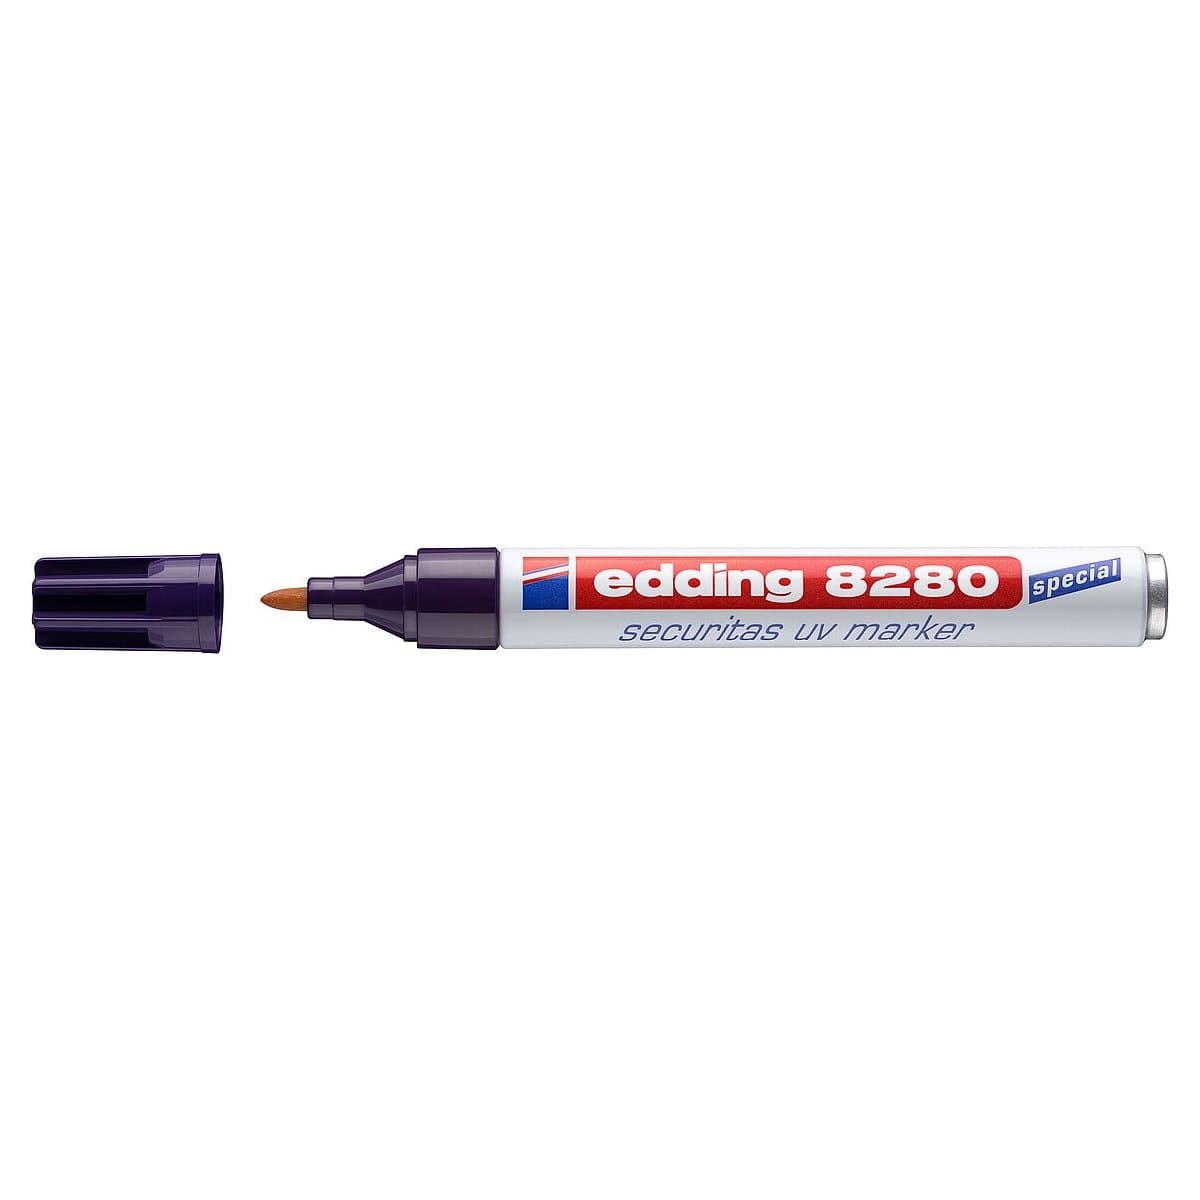 edding 8280 Securitas Invisible Fluorescent UV Marker, 1.5-3mm Bullet Tip, Transparent